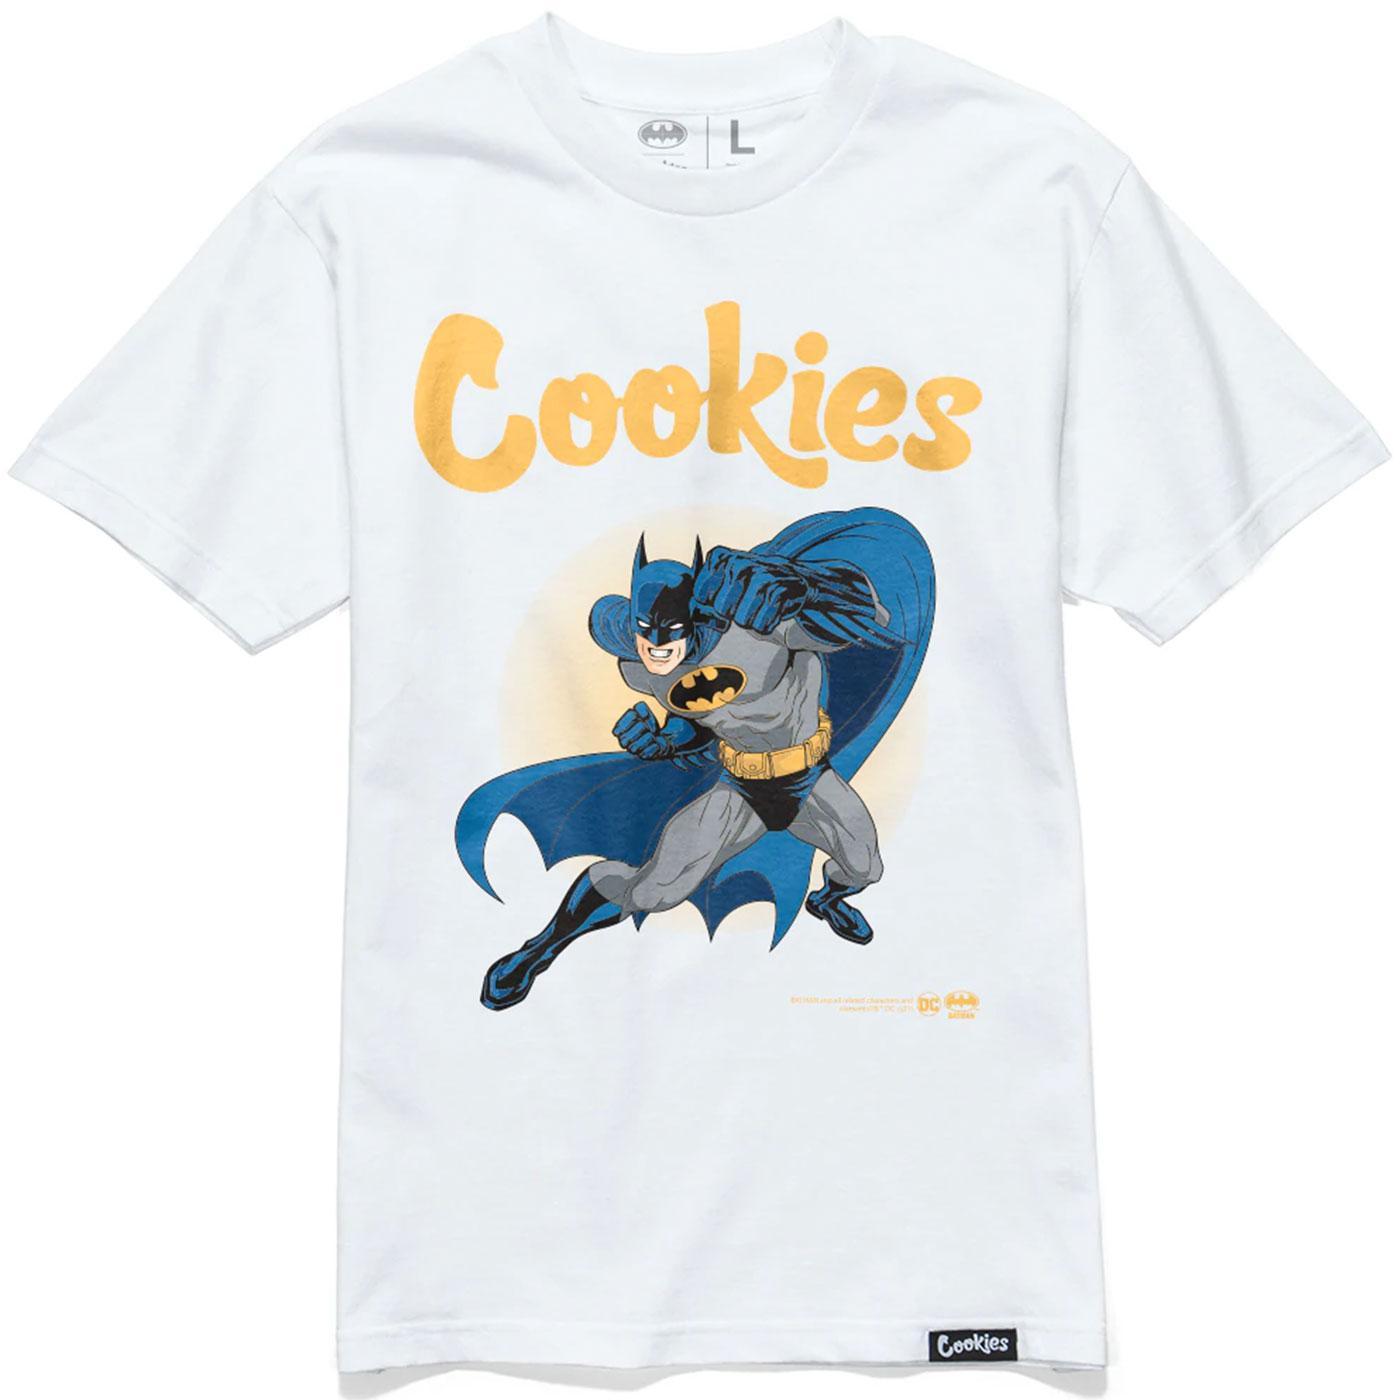 Cookies x Official Batman "Batman" Tee (White) | Cookies Clothing